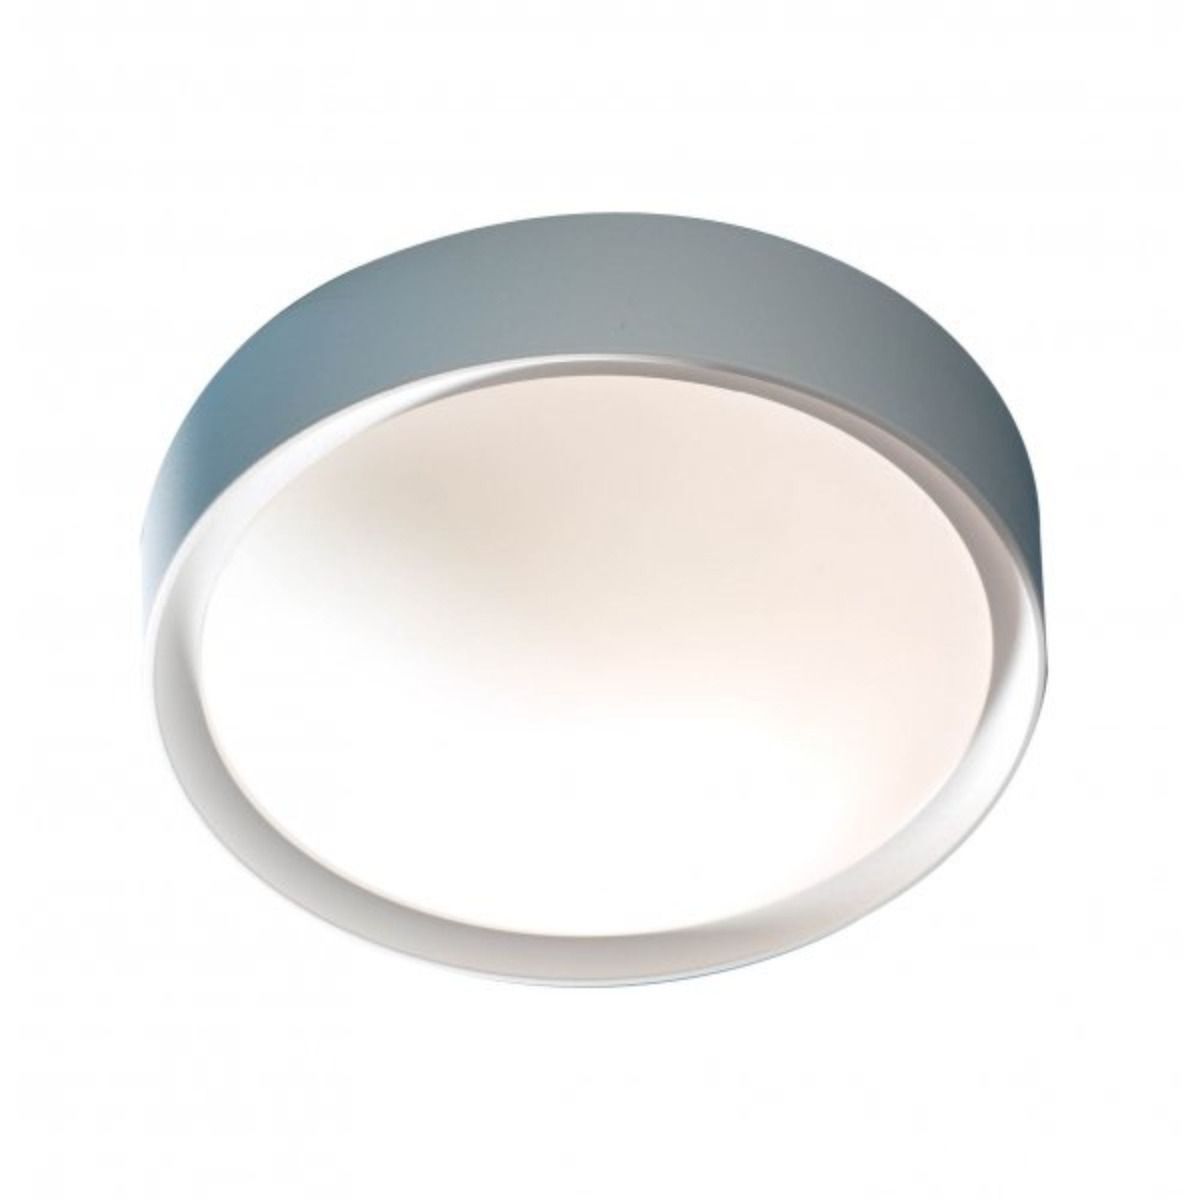 Beta White Bathroom IP44 Flush Ceiling Light with Opal Glass Shade